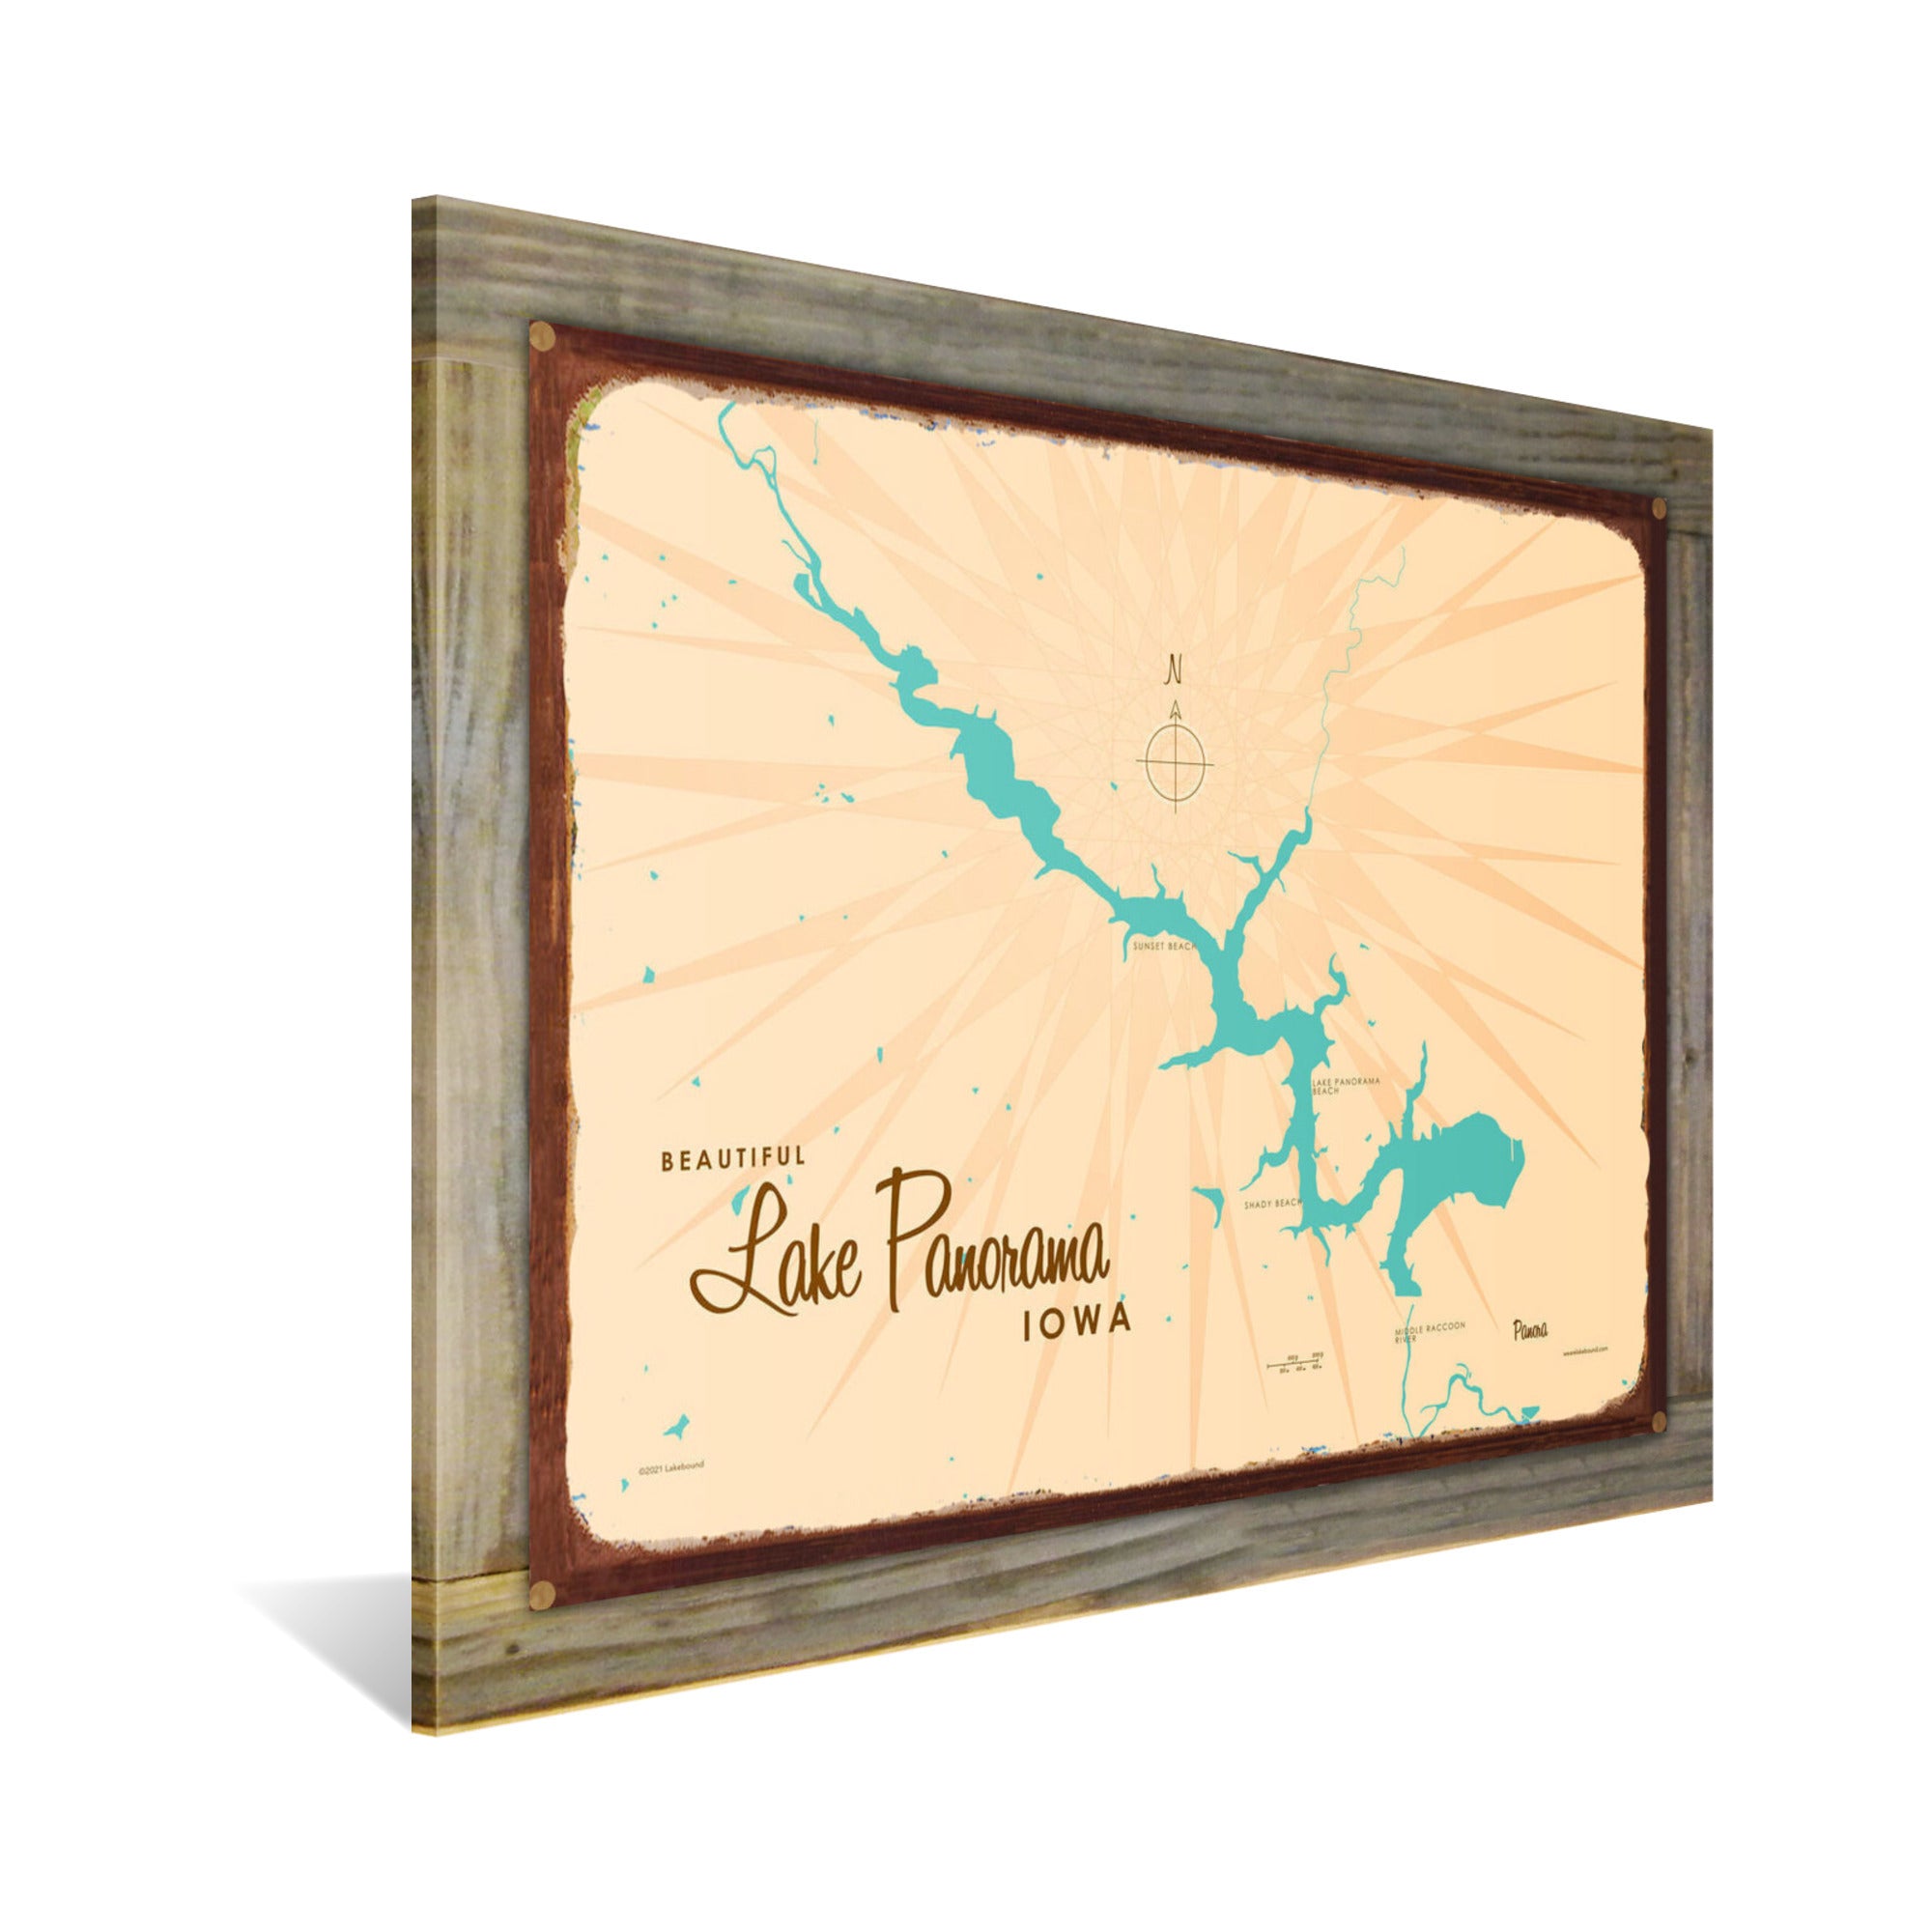 Lake Panorama Iowa, Wood-Mounted Rustic Metal Sign Map Art